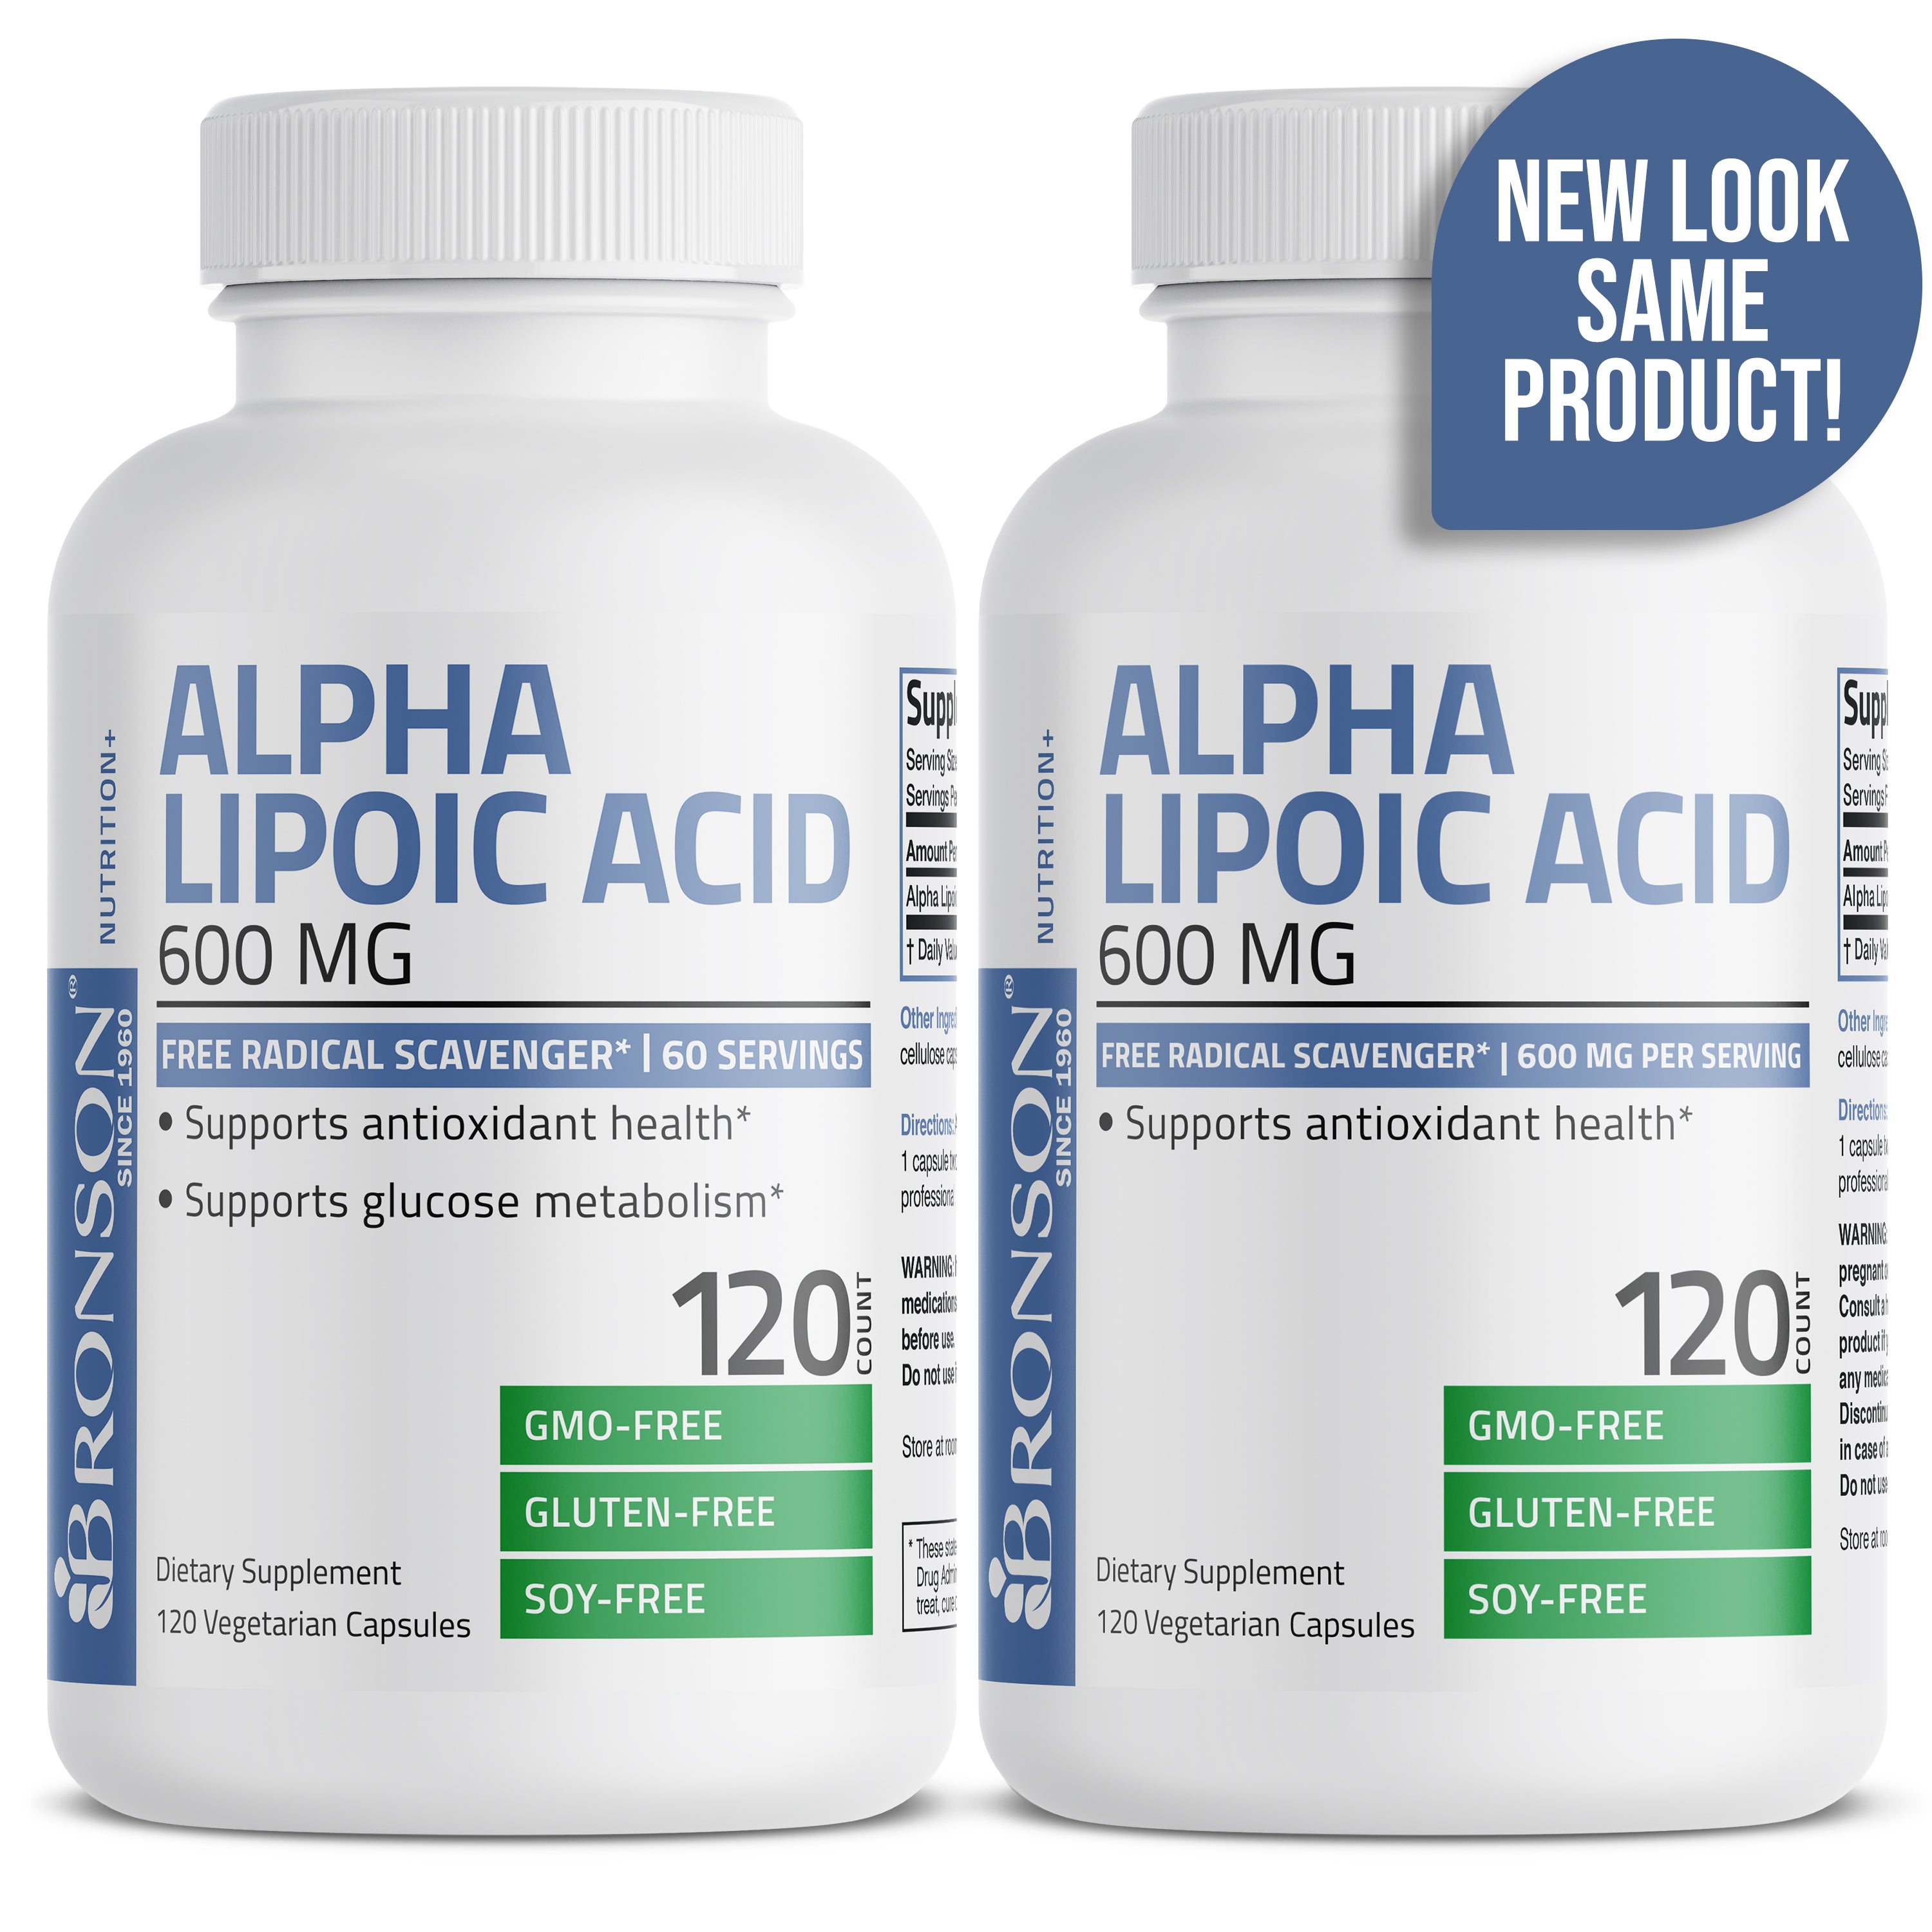 Alpha Lipoic Acid 600 MG view 3 of 7